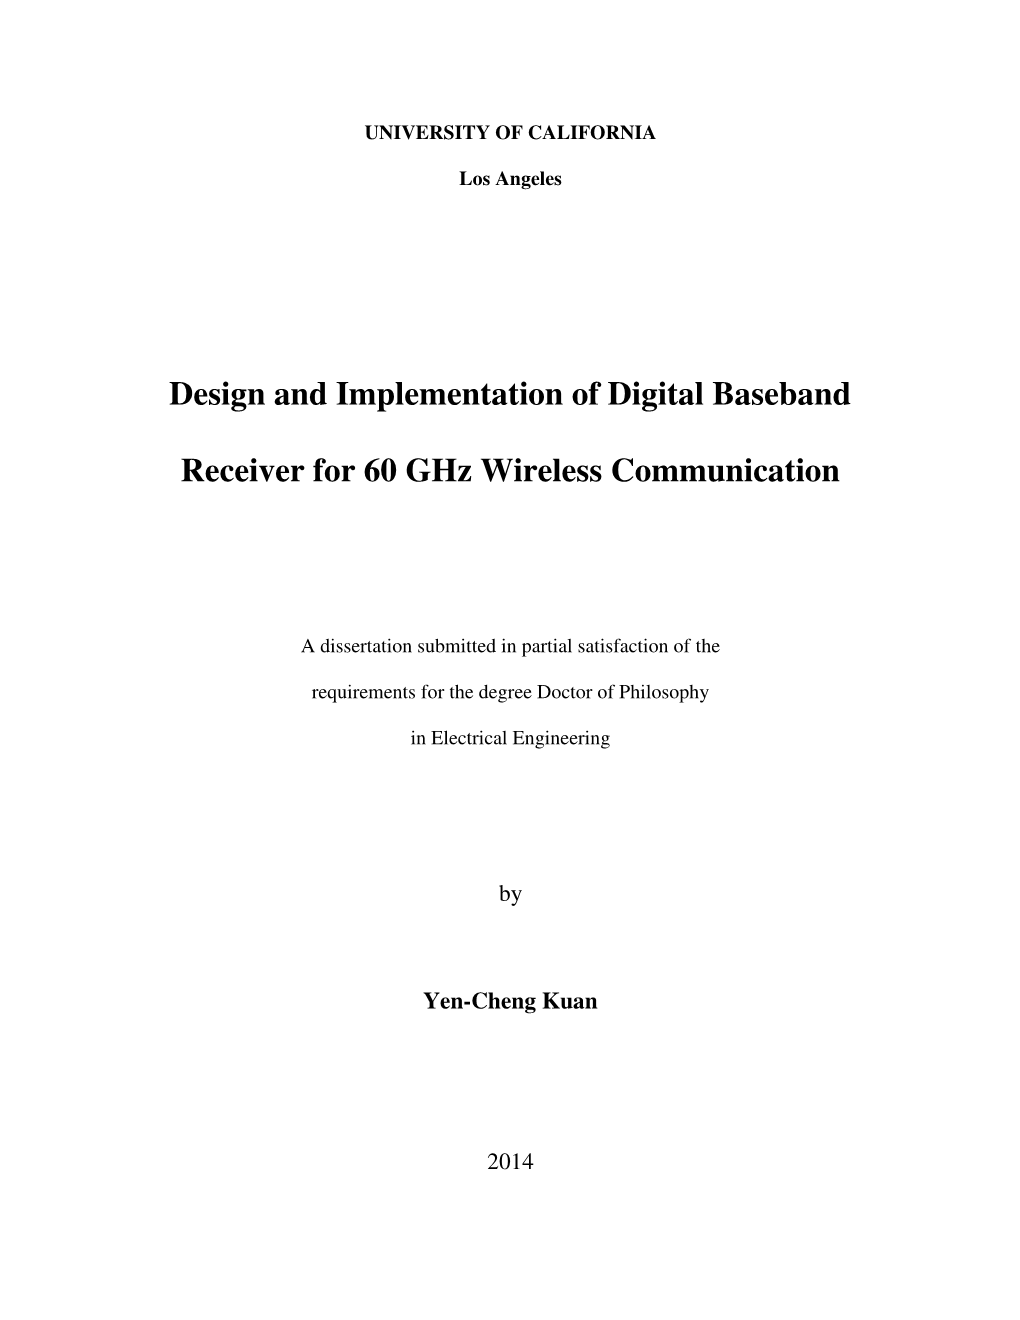 Design and Implementation of Digital Baseband Receiver for 60 Ghz